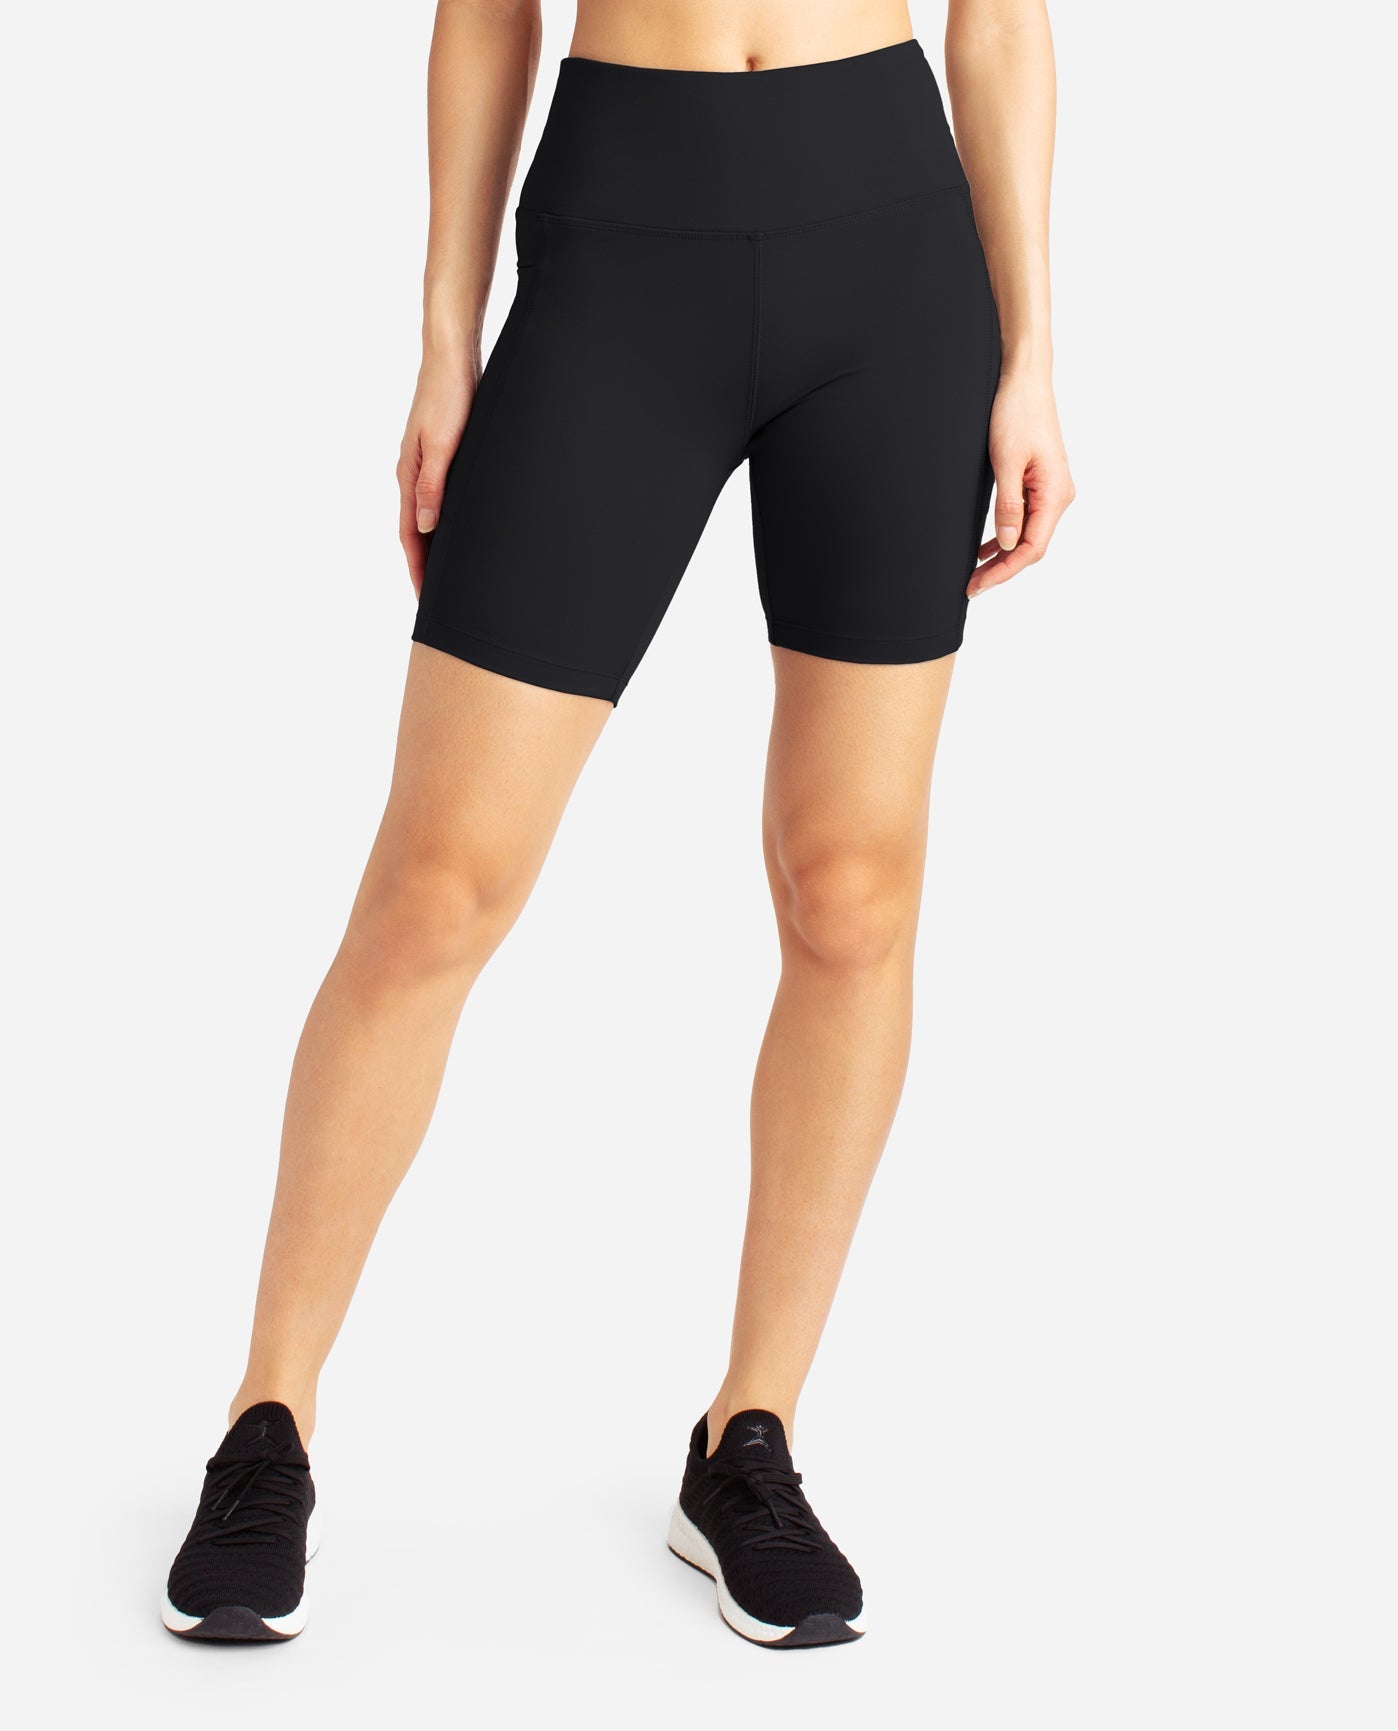 Women's 2-Pack High Rise Bike Shorts, Shorts